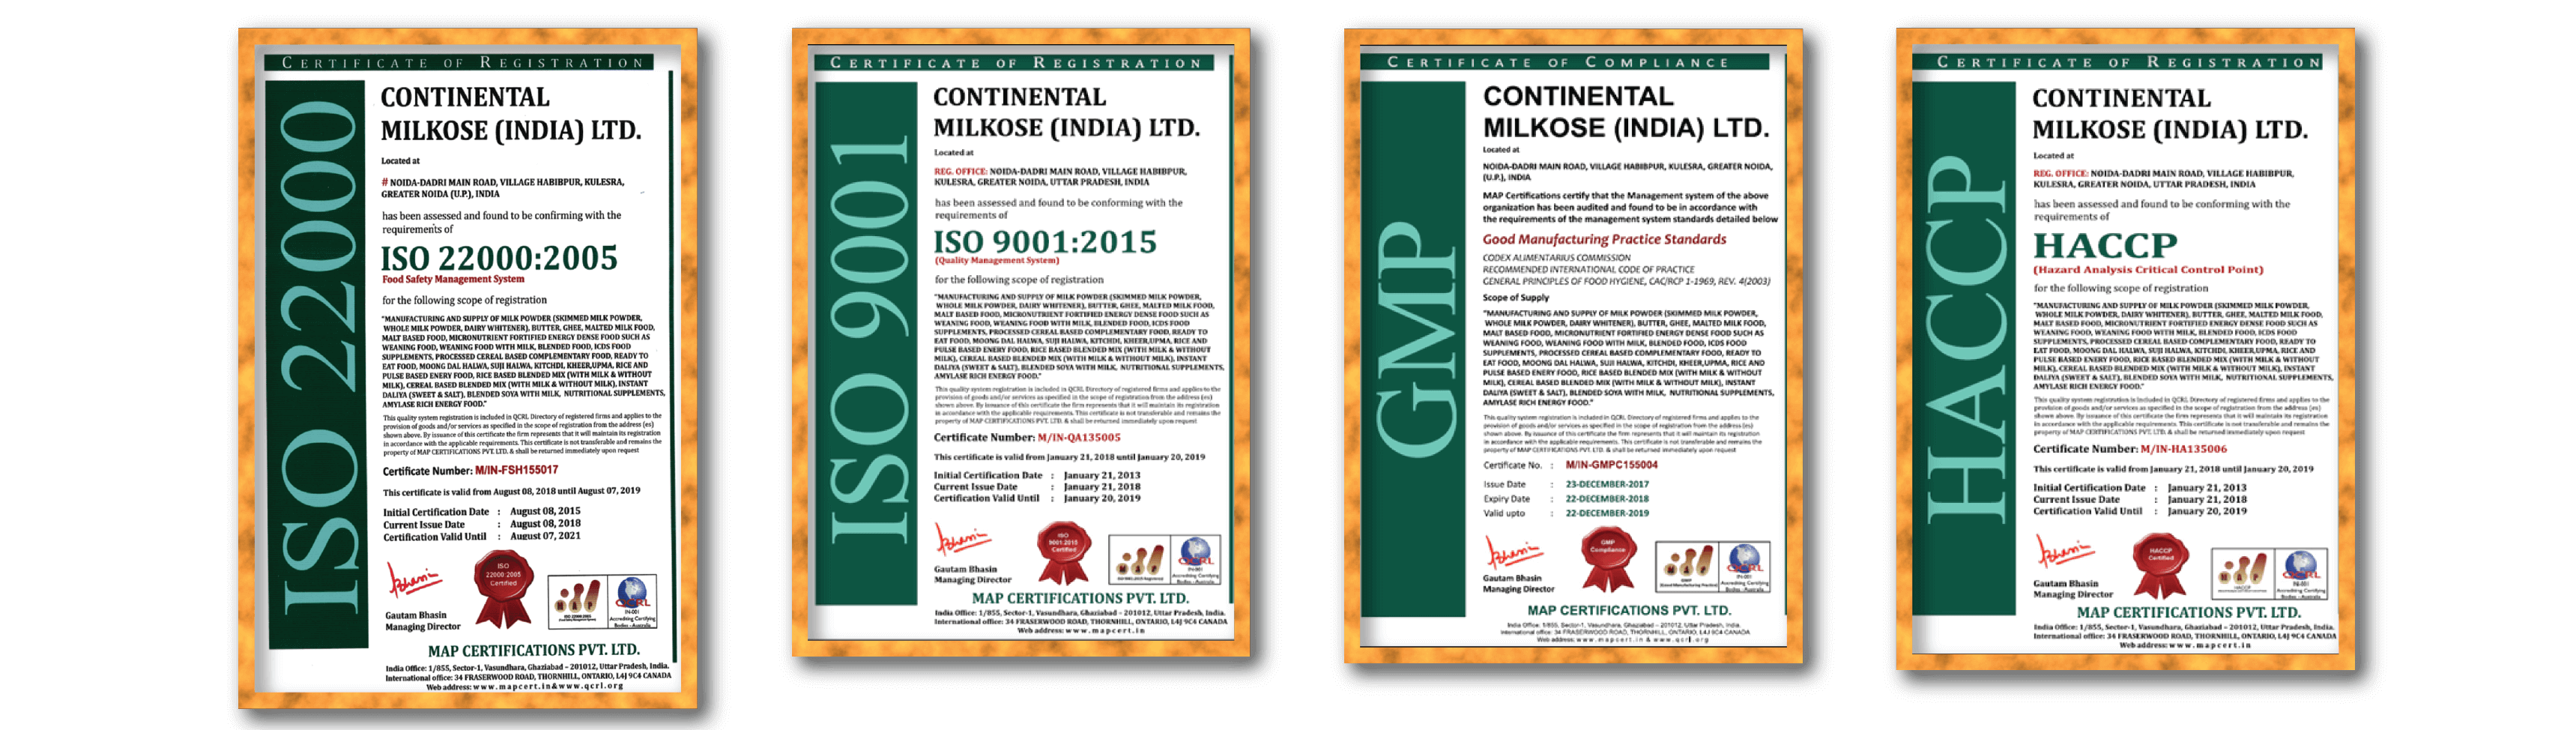 Certificates of Continental Milkose India Ltd